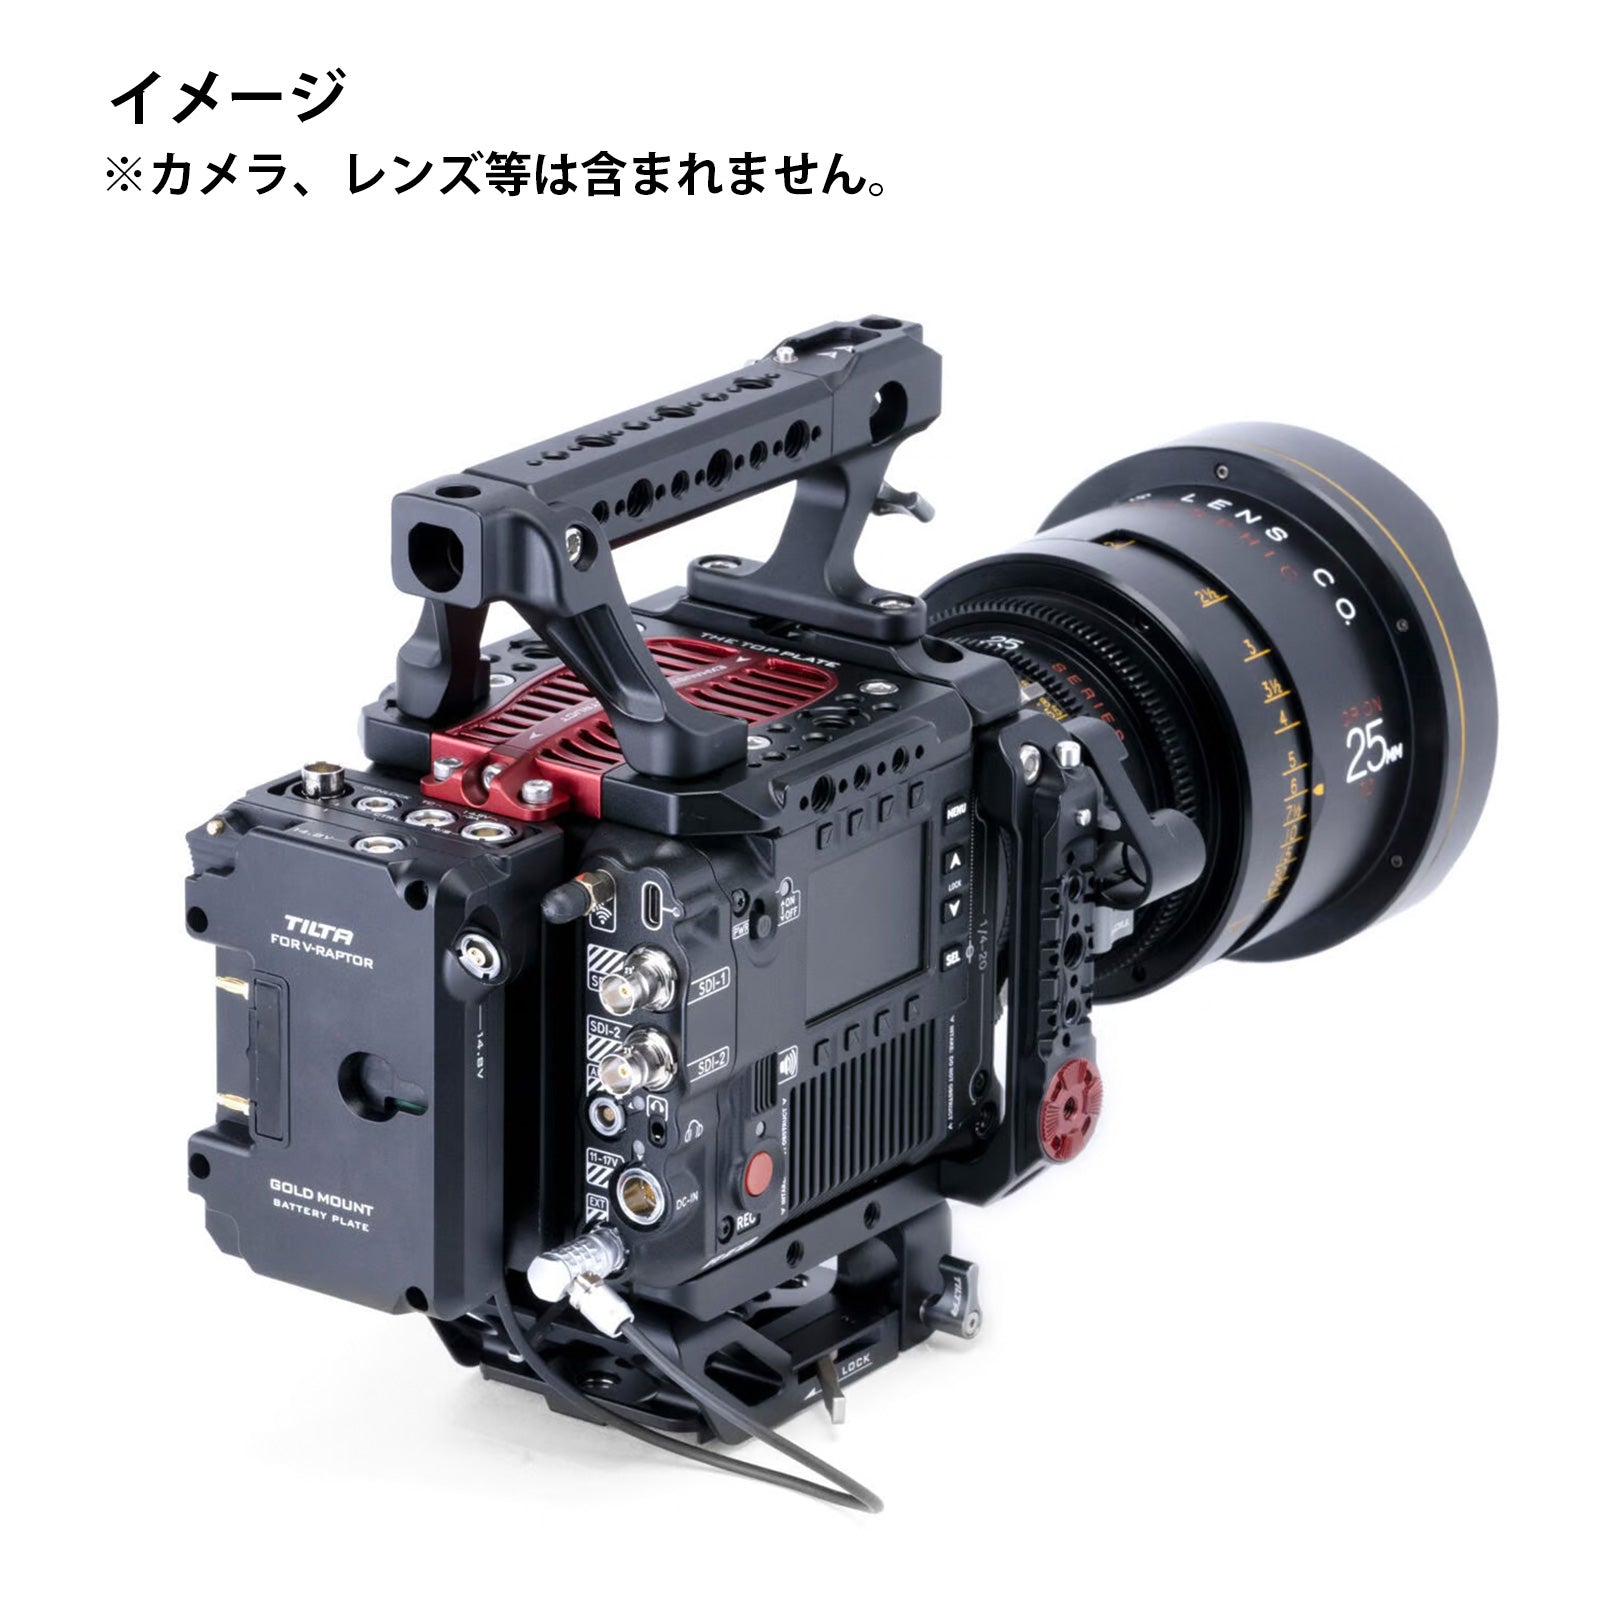 TILTA(ティルタ) Camera Cage for RED V-RAPTOR Advanced Kit - Gold Mount(アントンマウント) ESR-T08-B-AB